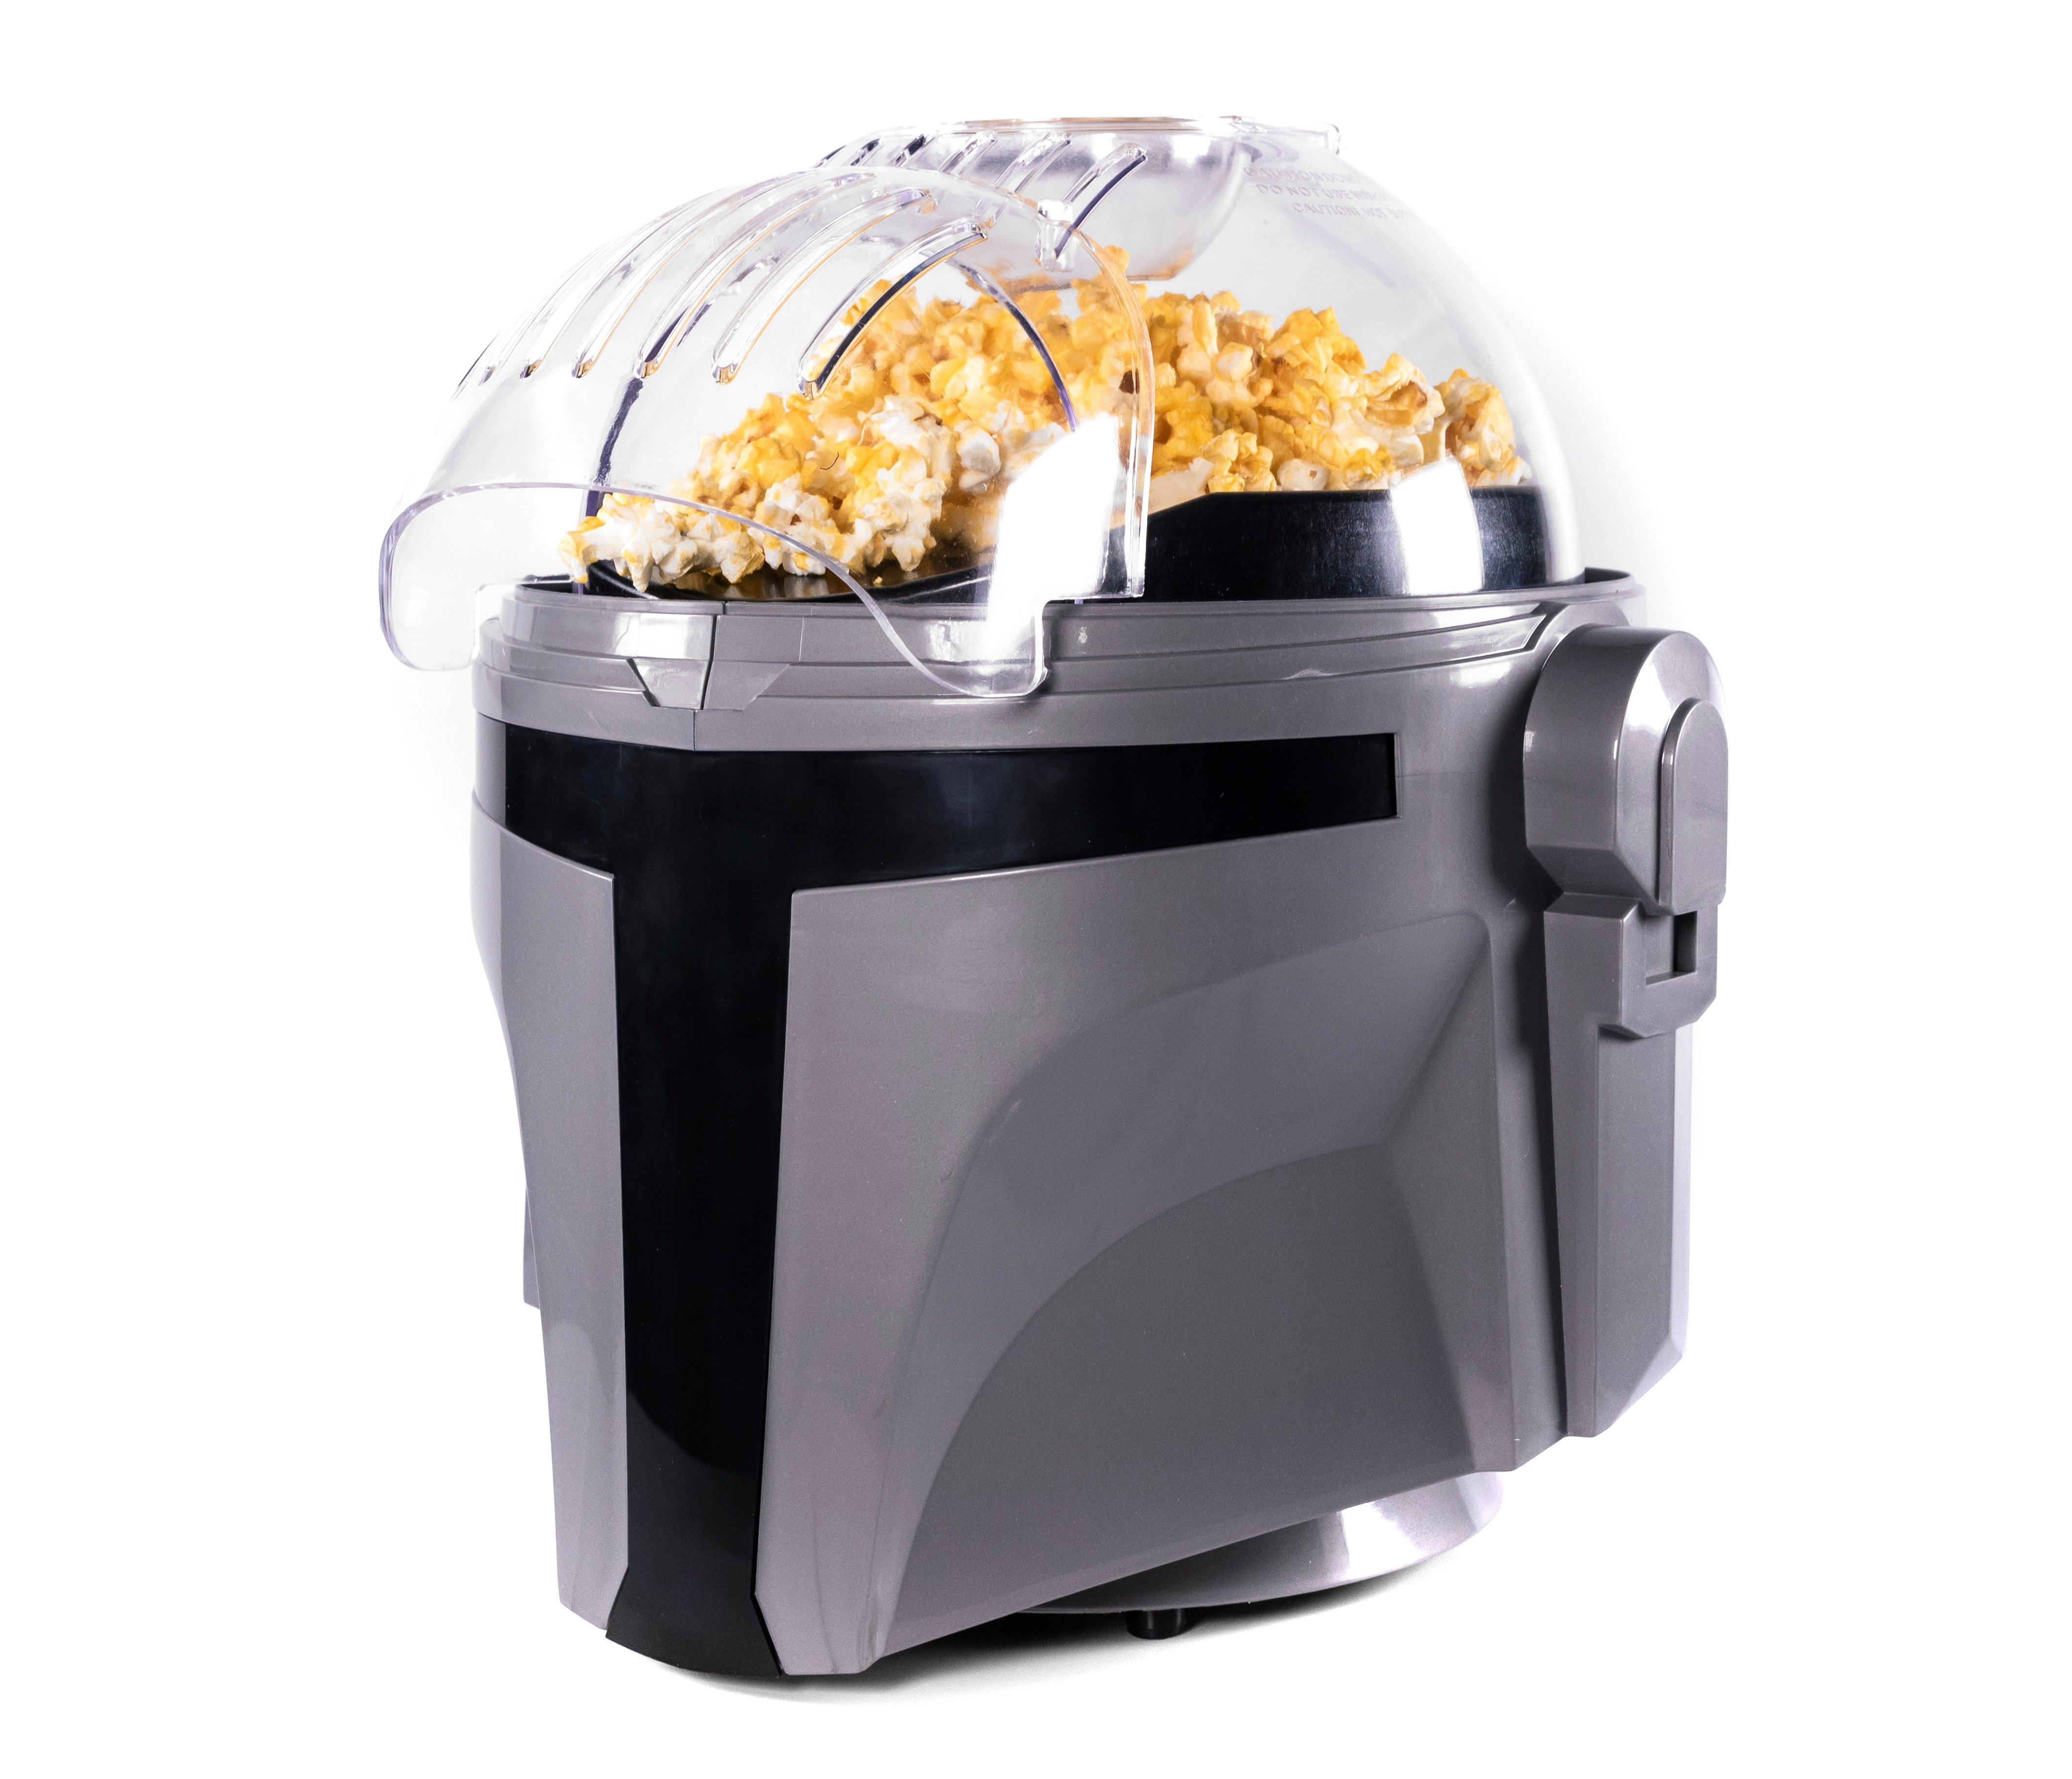 Magic Popcorn Maker - KidsBaron